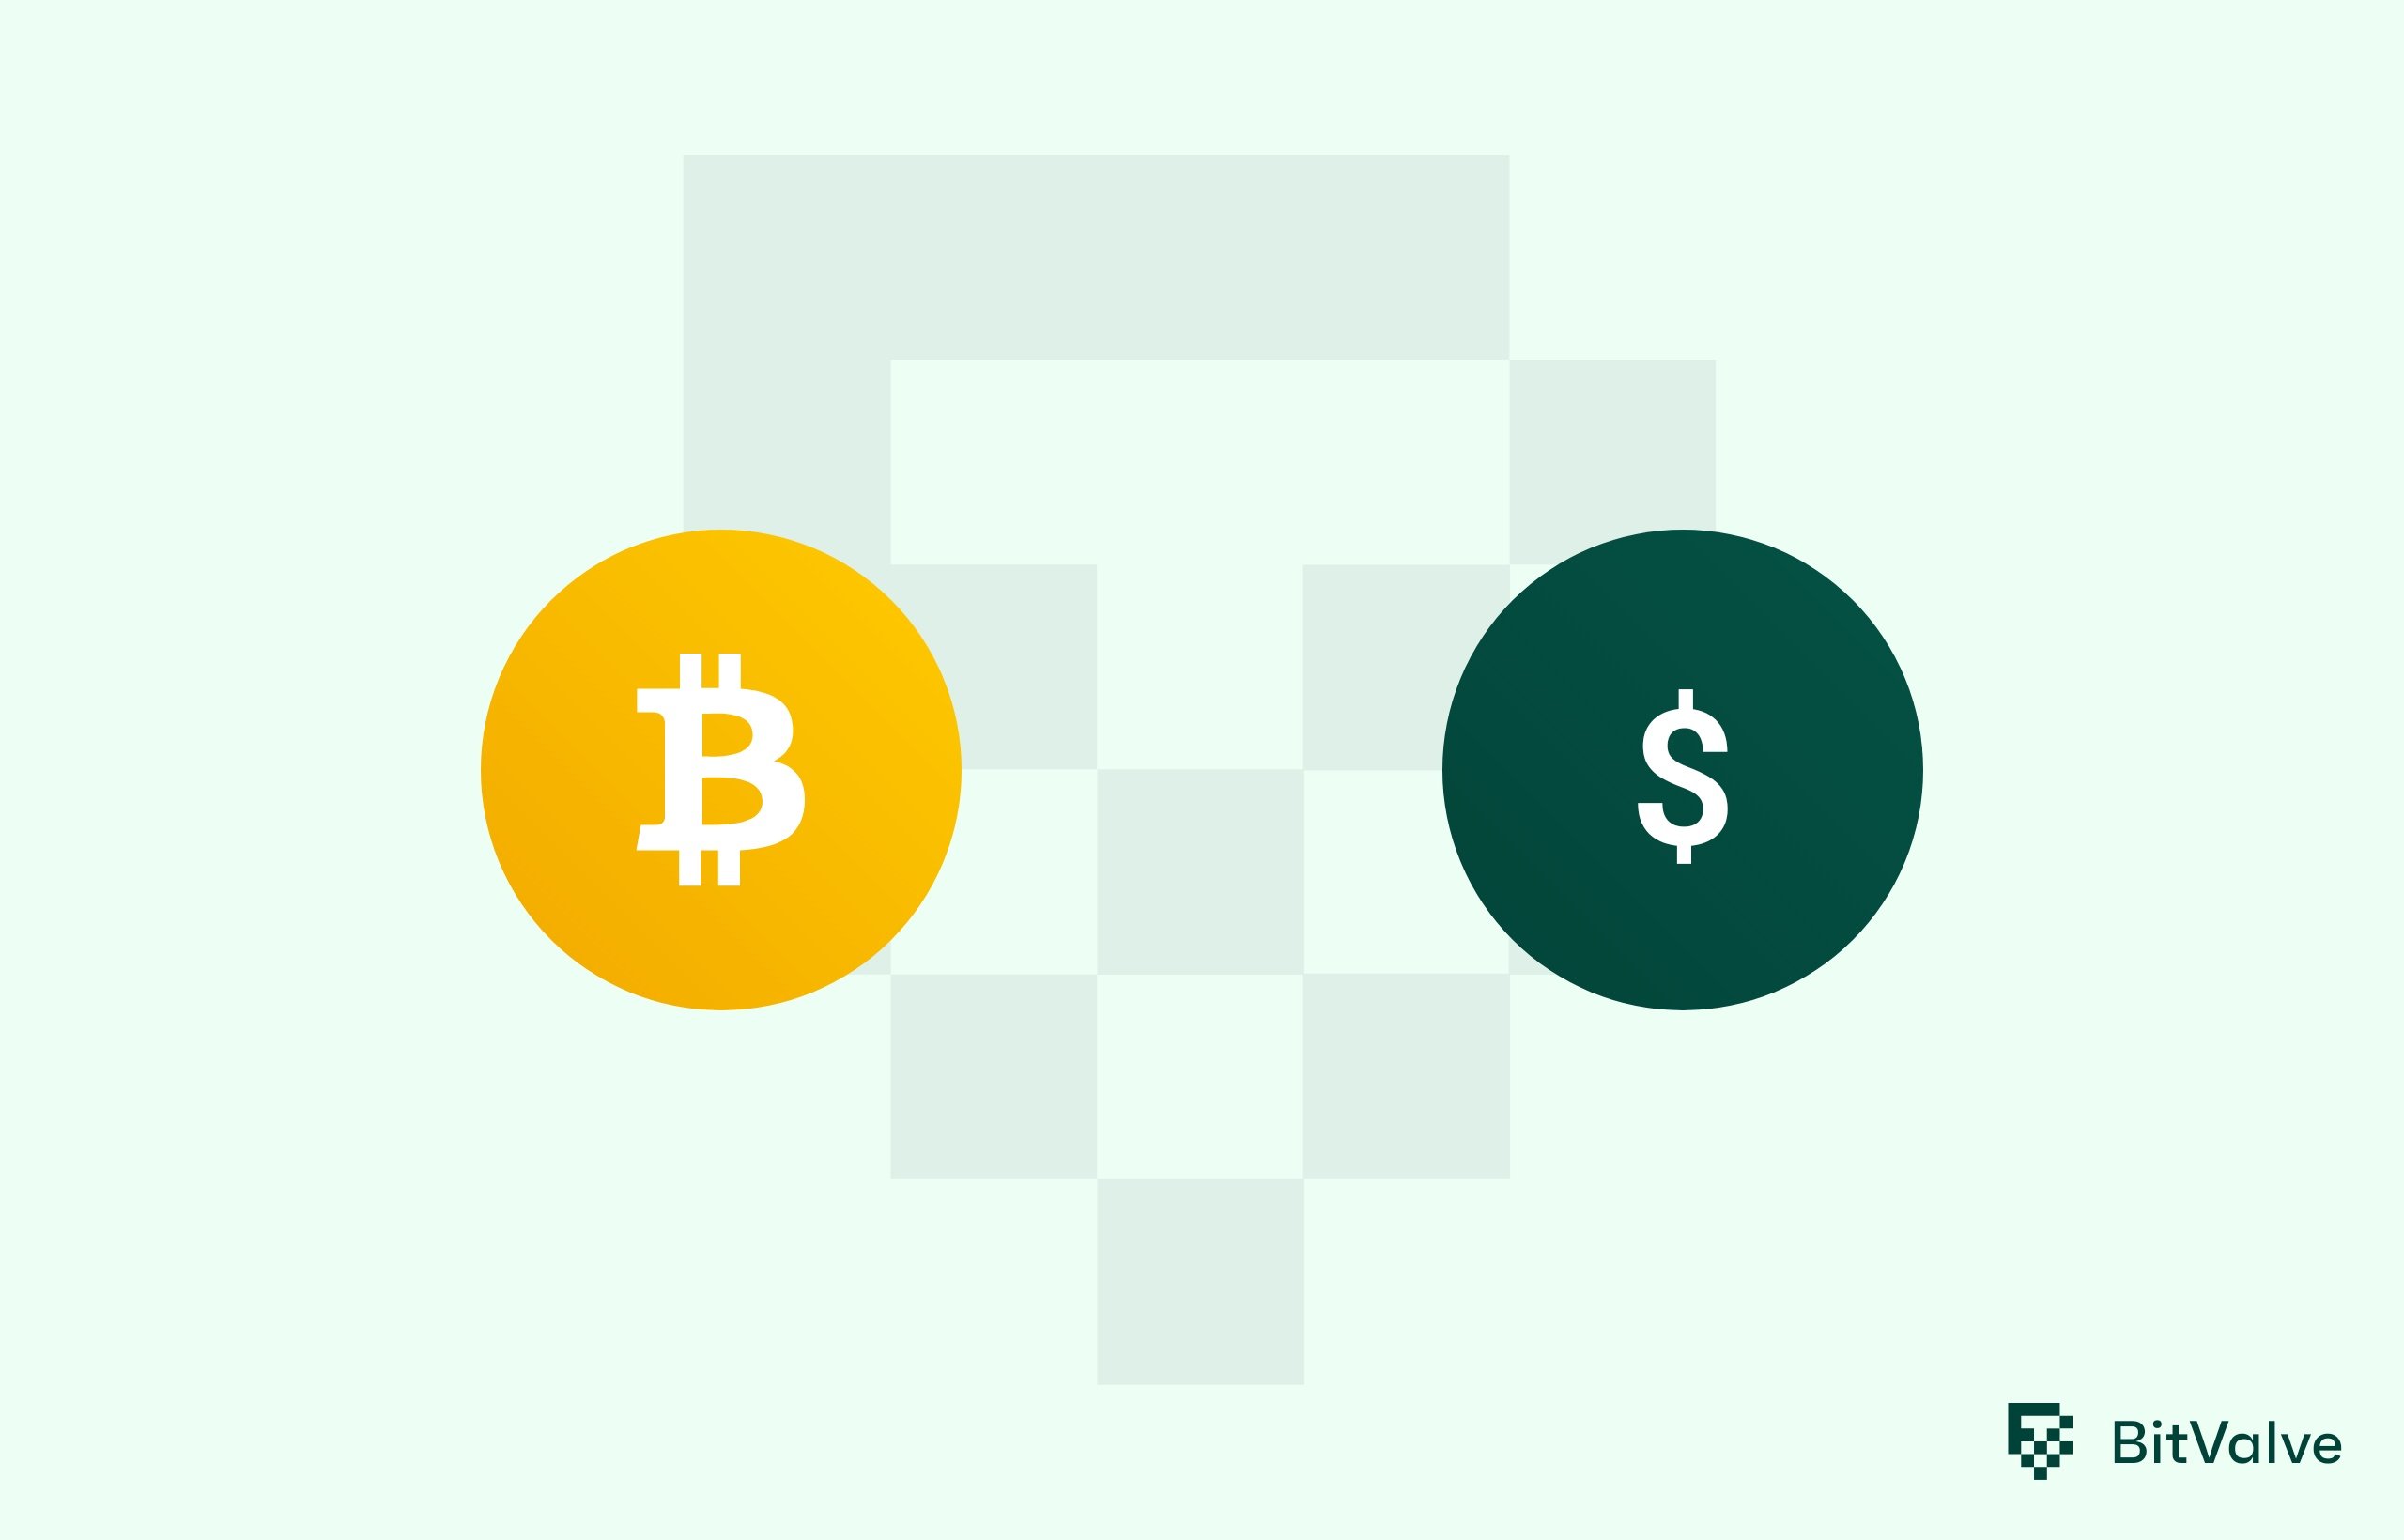 BTC to USD (Bitcoin to Dollar) - BitcoinsPrice